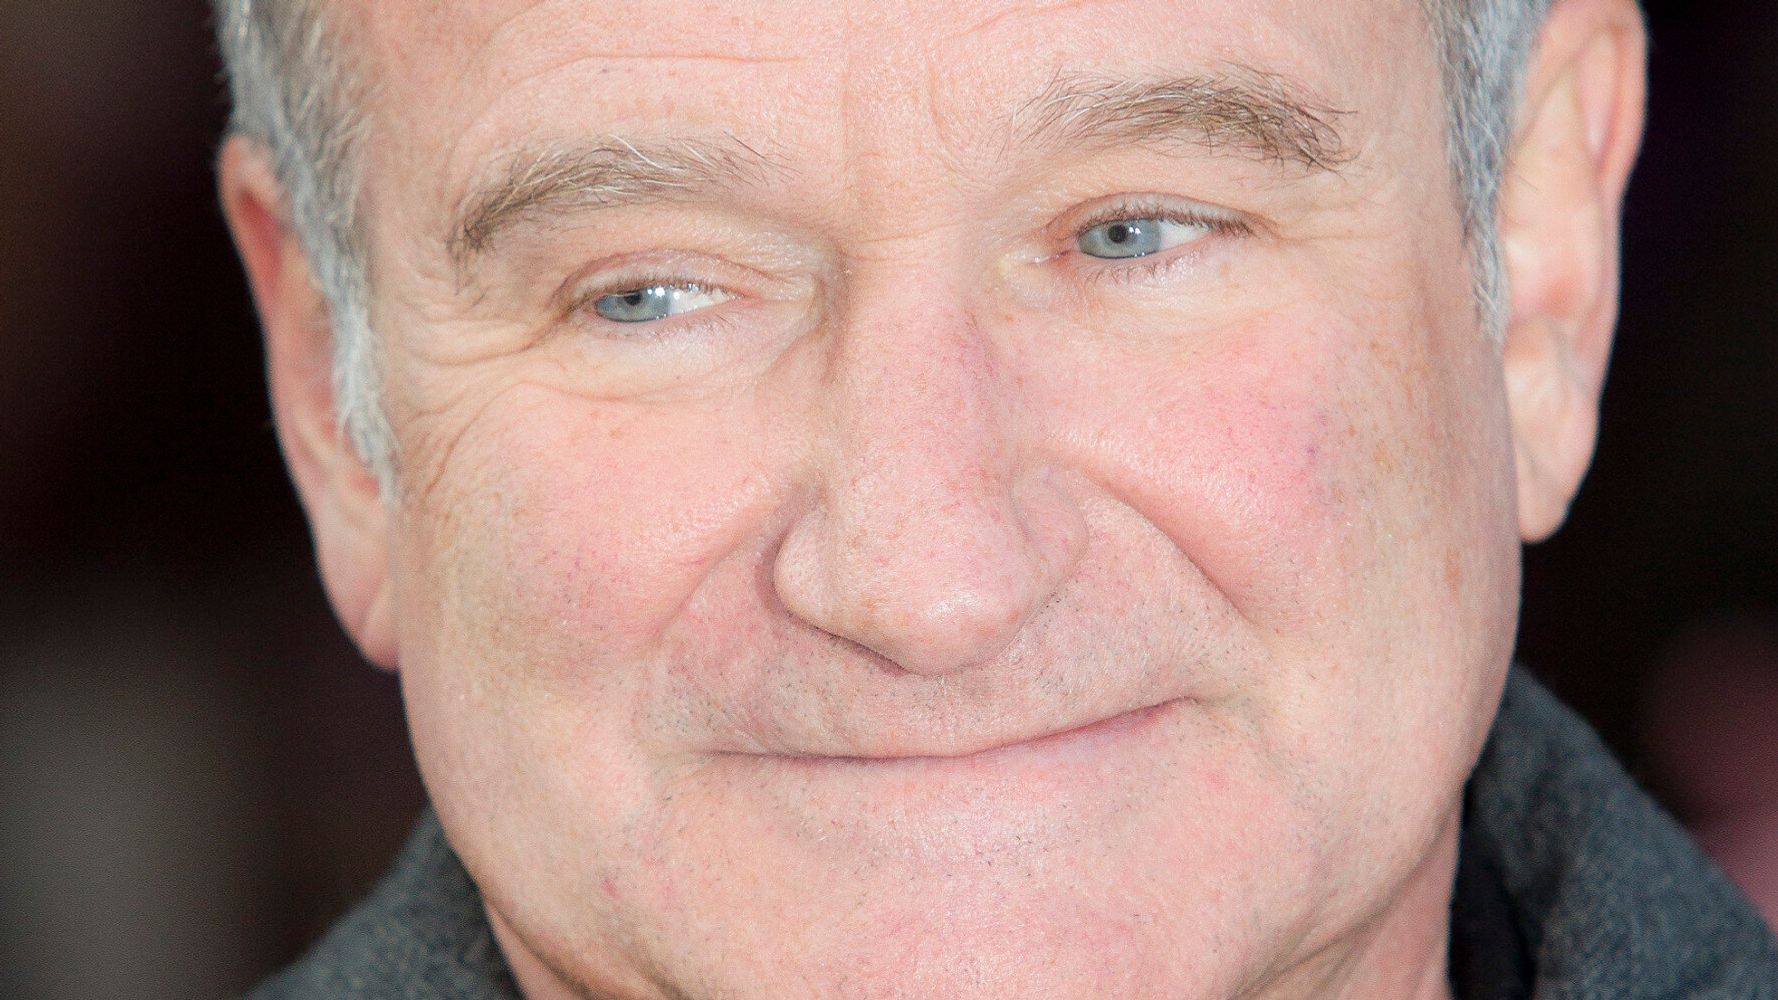 Robin Williams Had Parkinson's Disease, According To His Wife